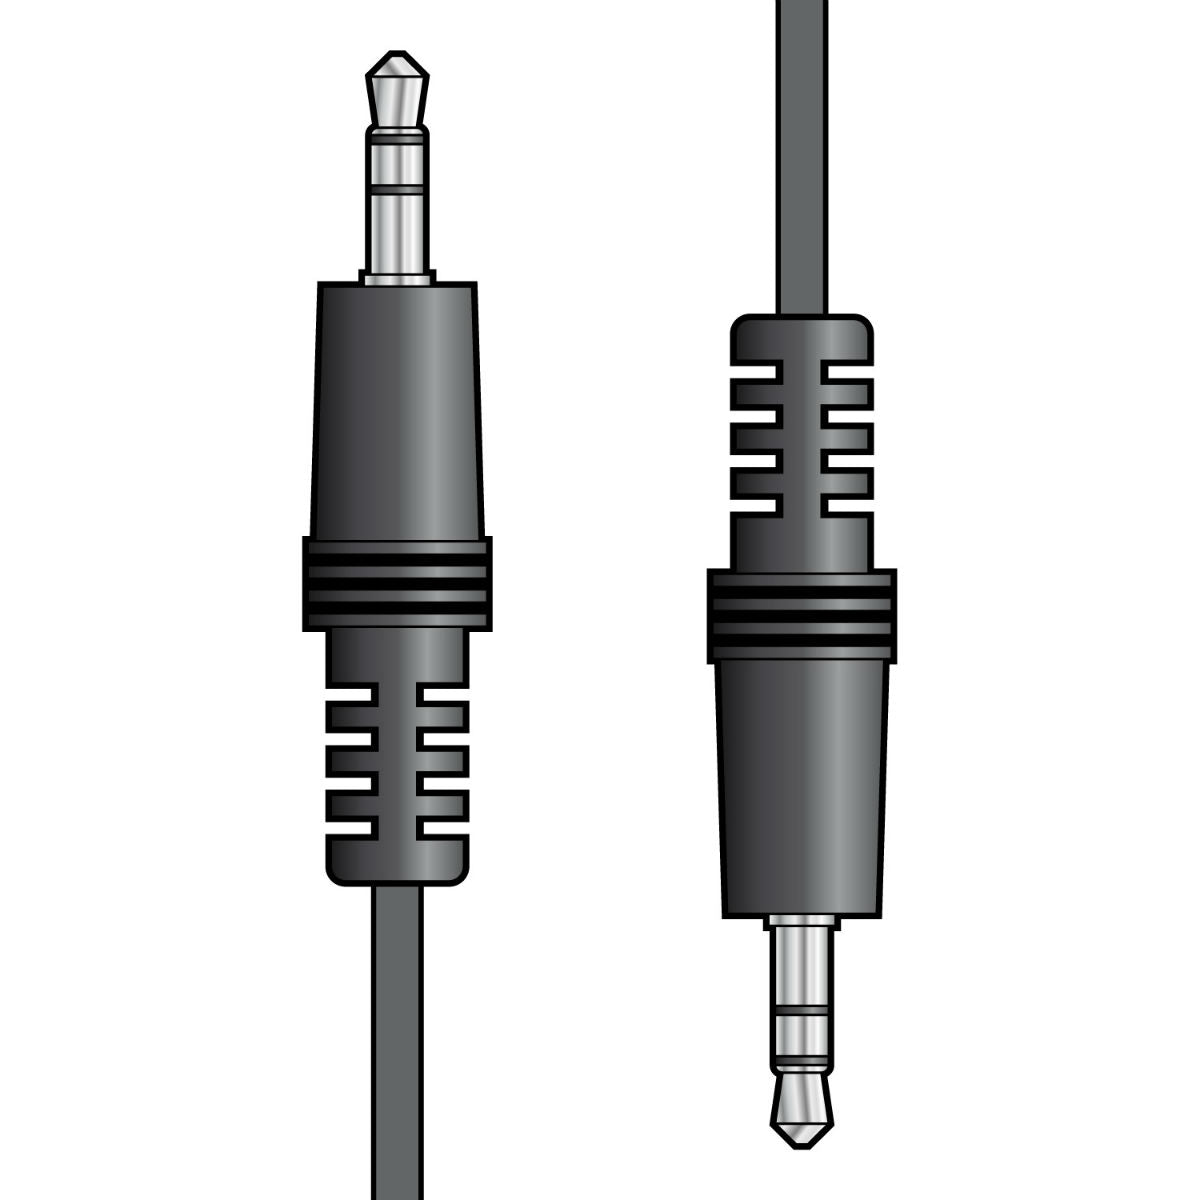 AV:LINK Stereo Minijack Cable 1.5m (115036)